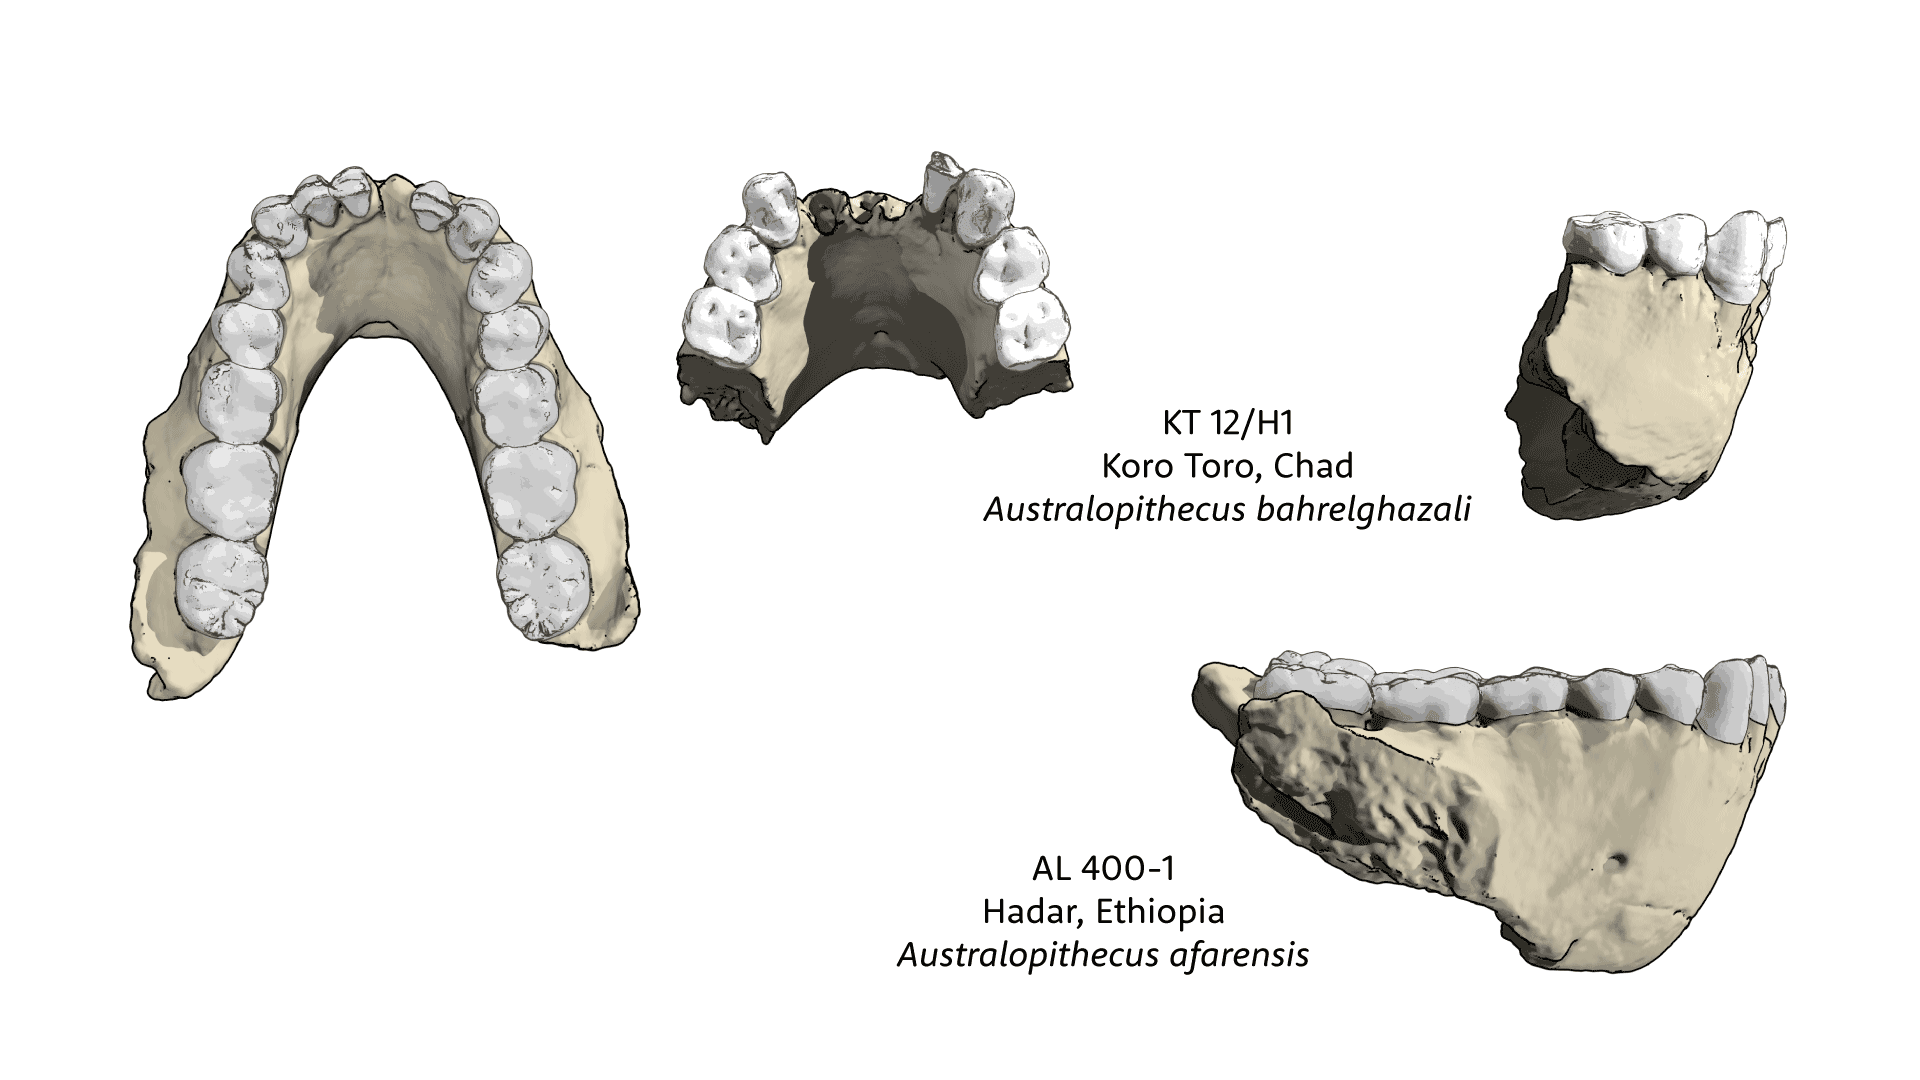 Comparison of KT 12/H1 mandibular fragment with AL 400-1 mandible of Australopithecus afarensis